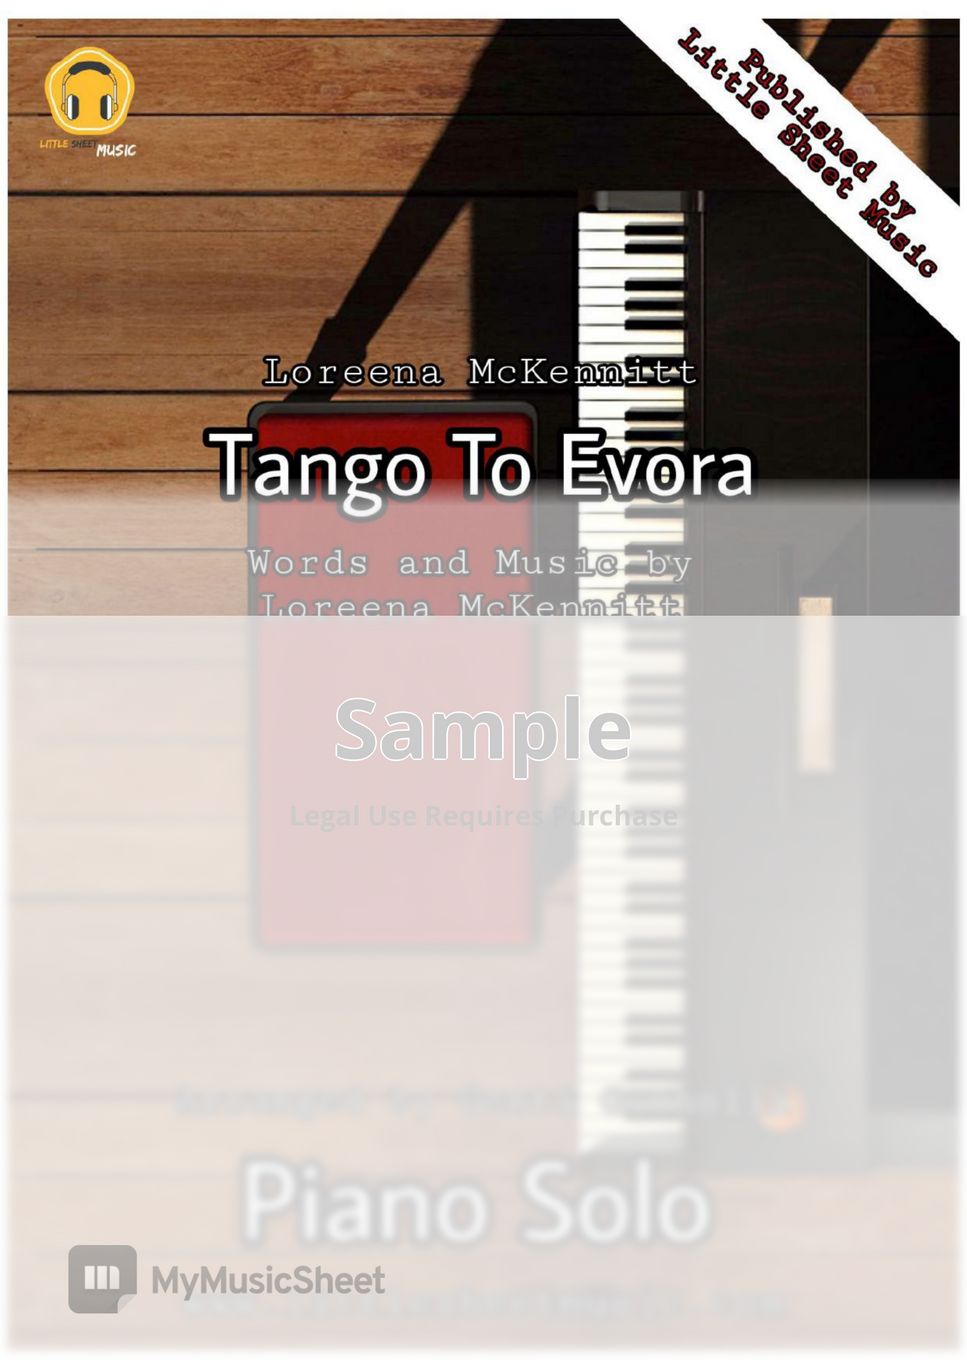 Loreena McKennitt - Tango To Evora by Genti Guxholli